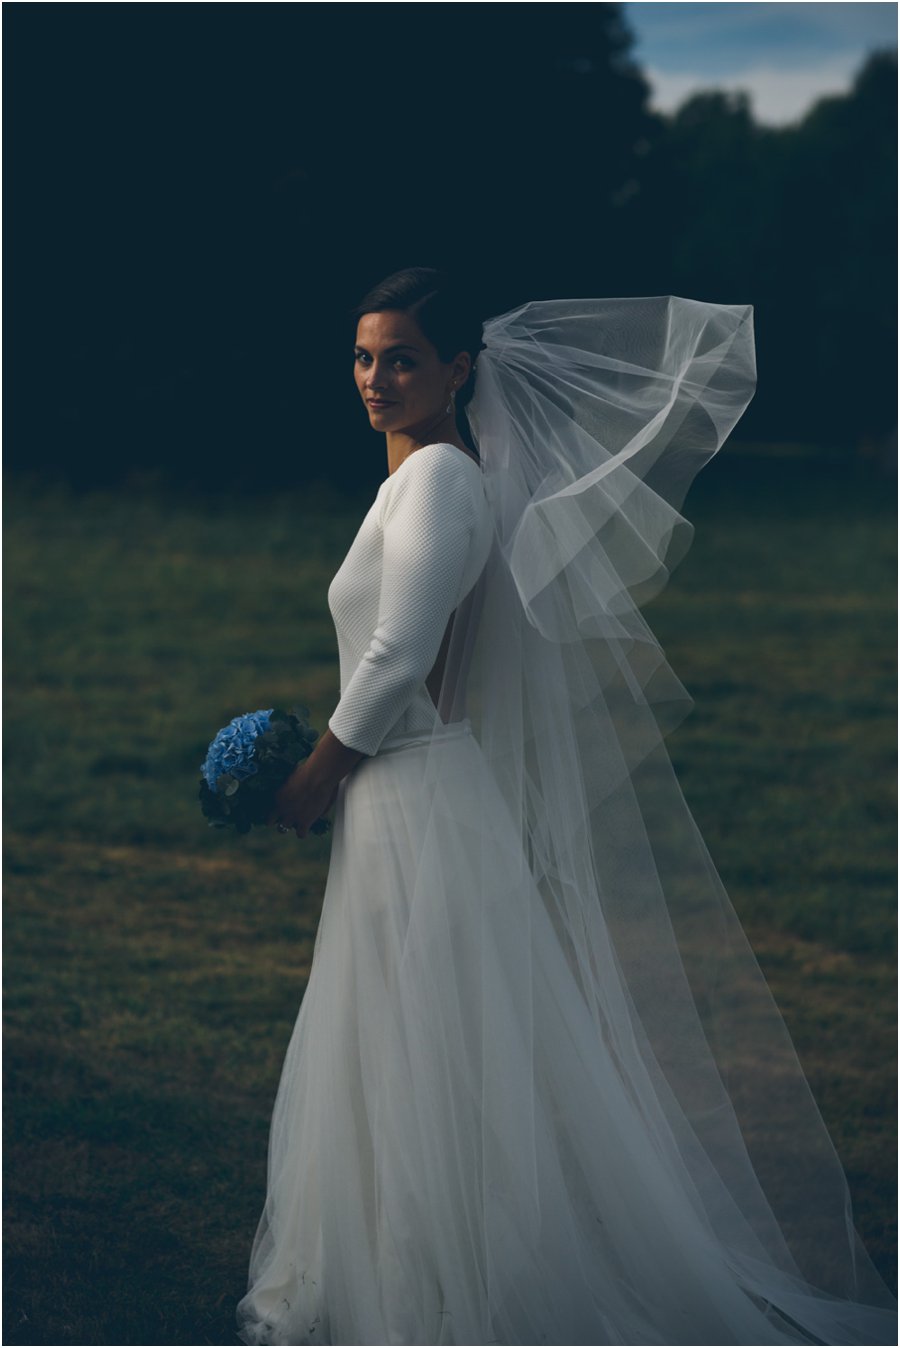 Stunning bride in gorgeous light